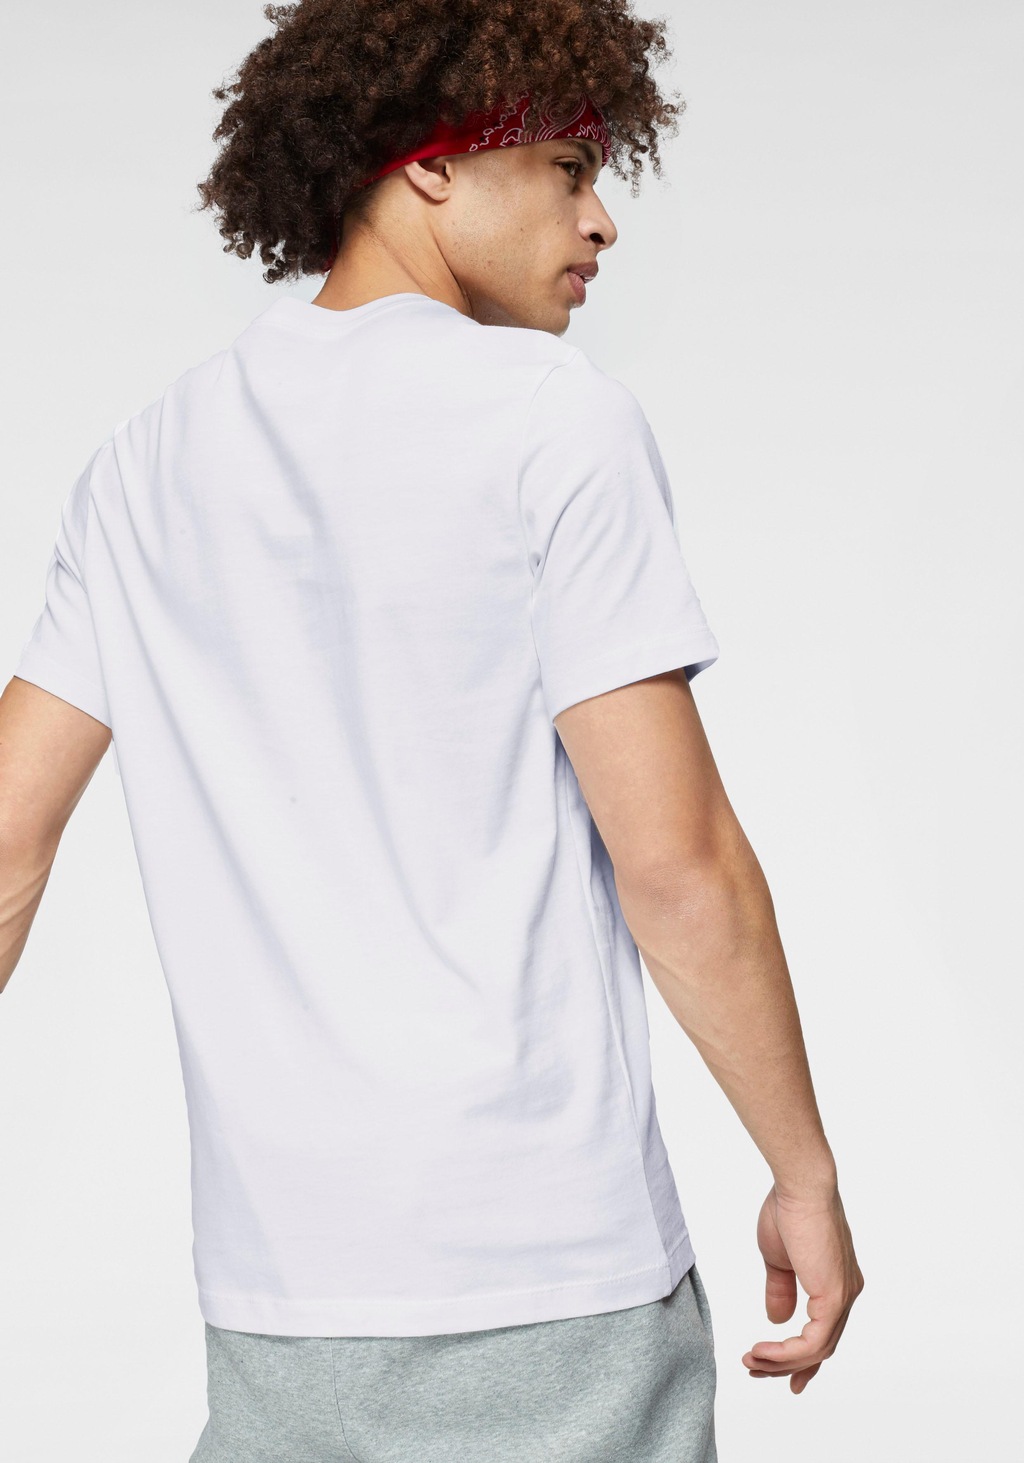 Nike Sportswear Icon Futura Kurzarm T-shirt 2XL White / Black günstig online kaufen